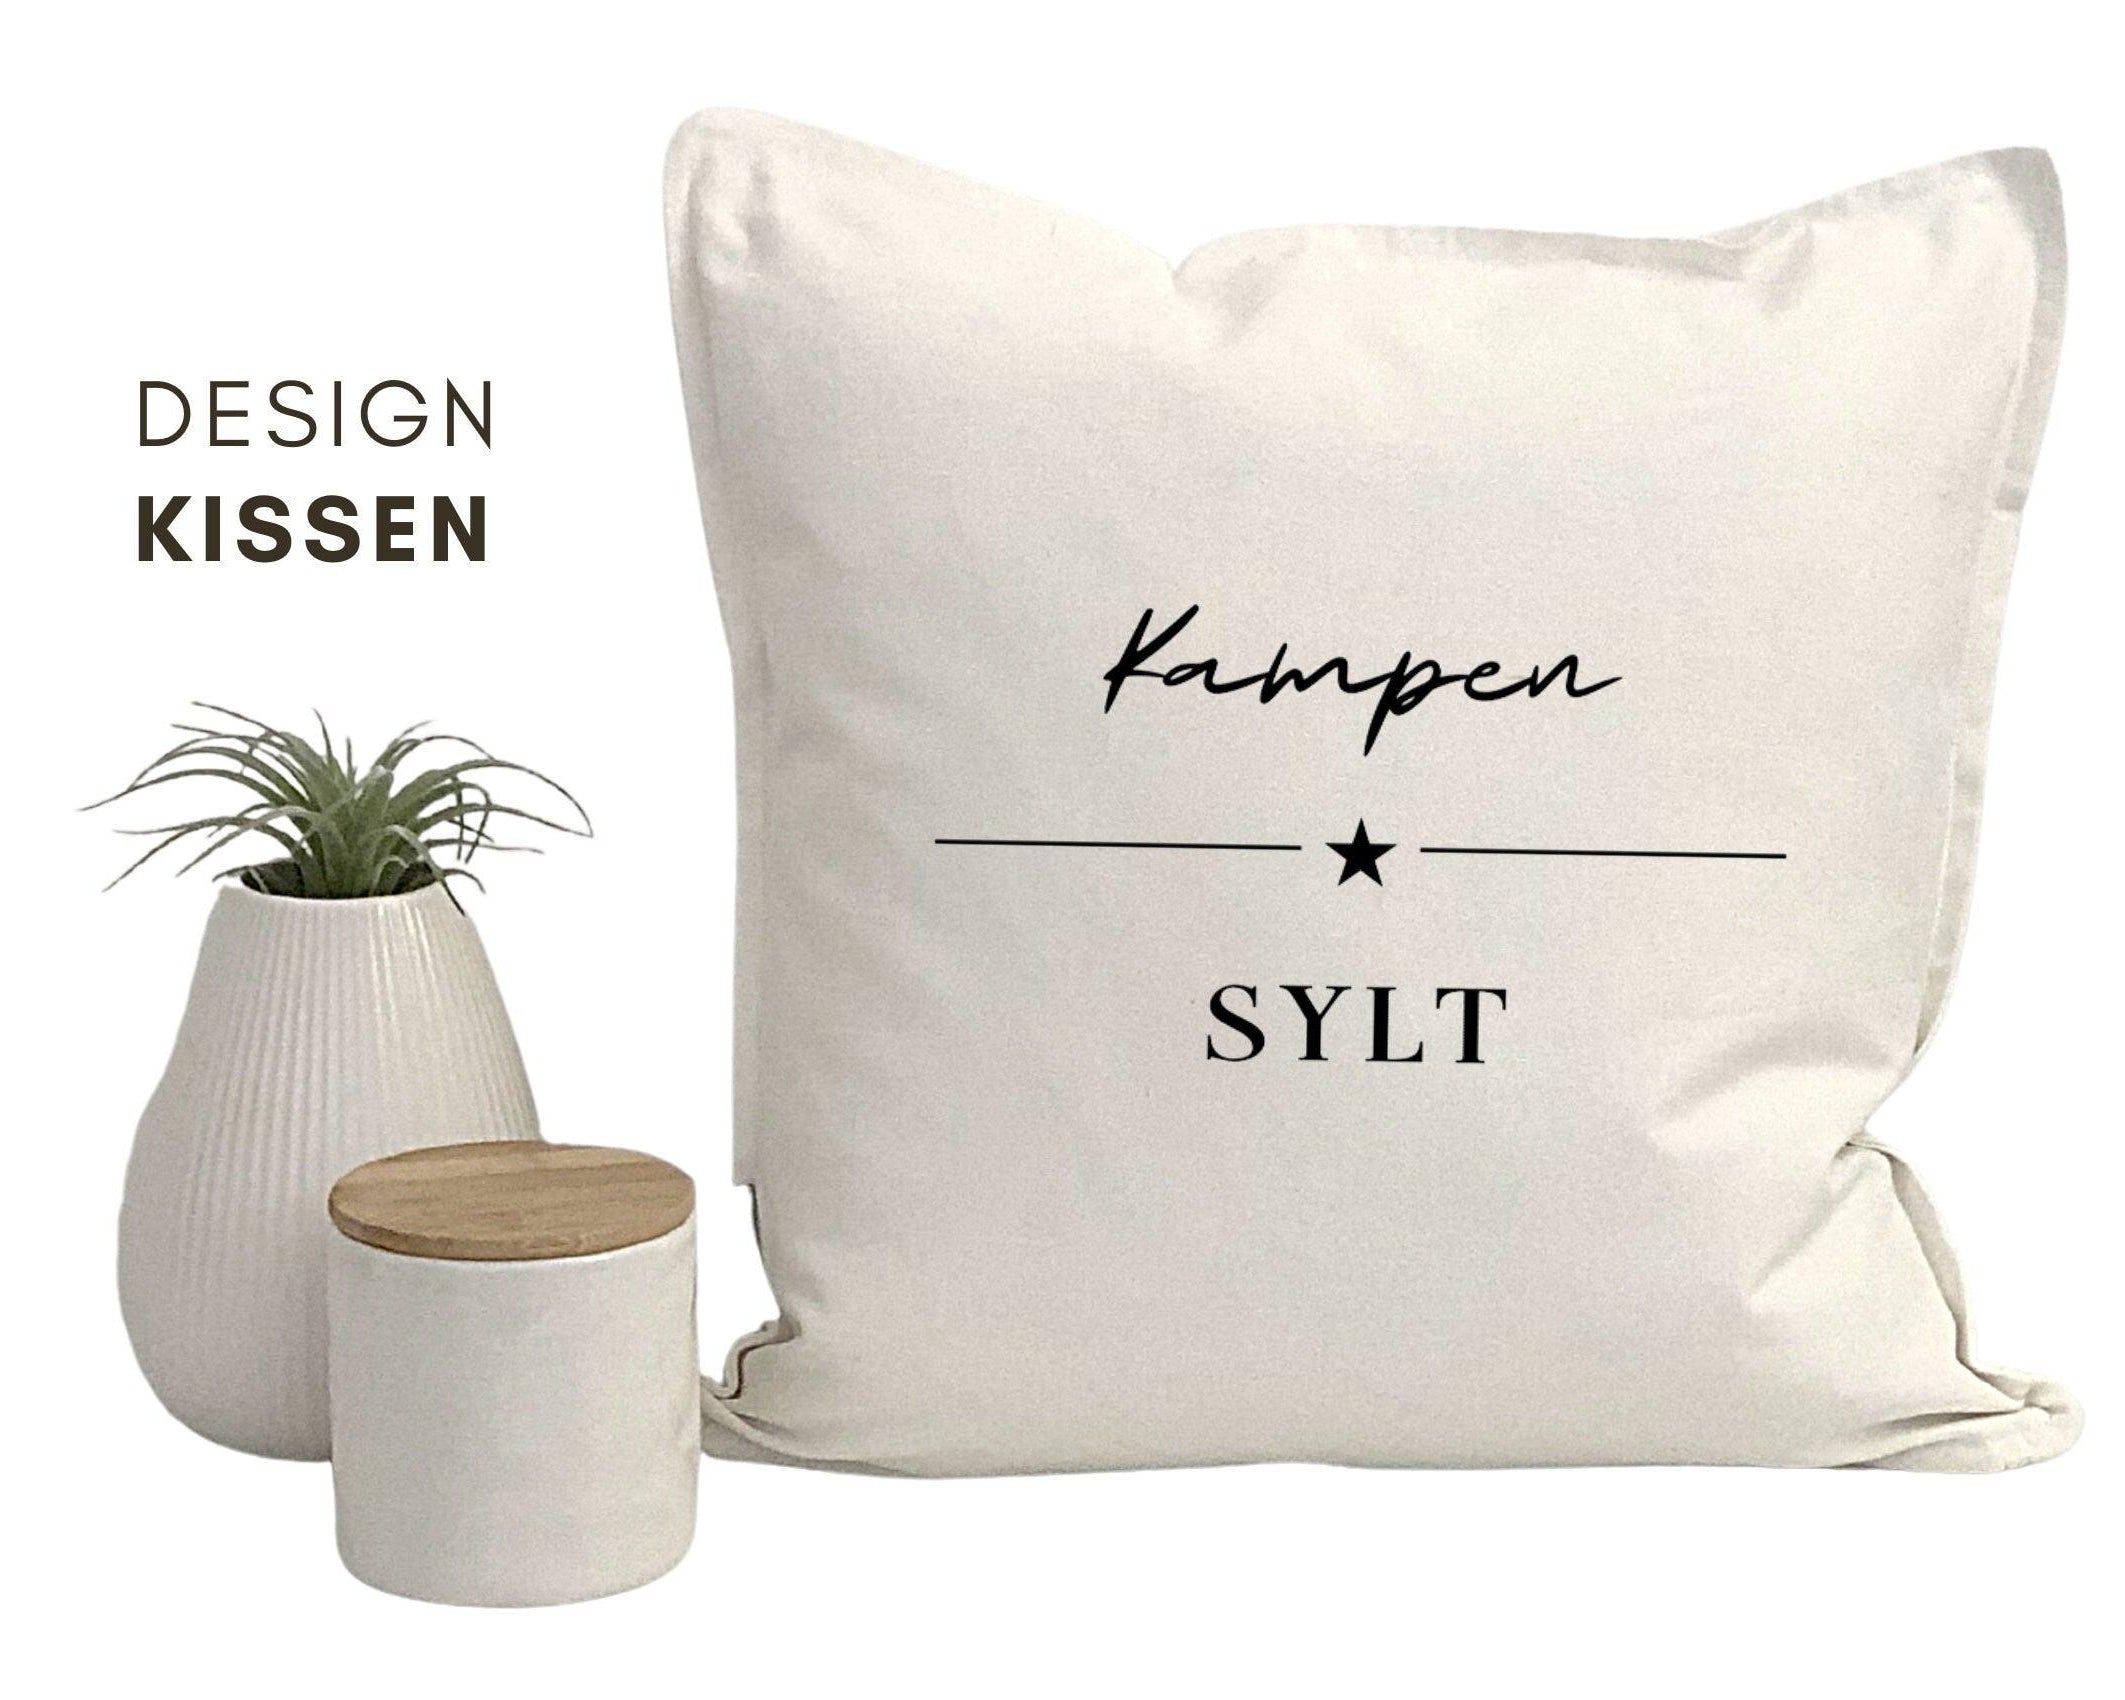 Kissen | Kampen Sylt | Kissenbezug im Strandhaus-Stil - Roo's Gift Shop